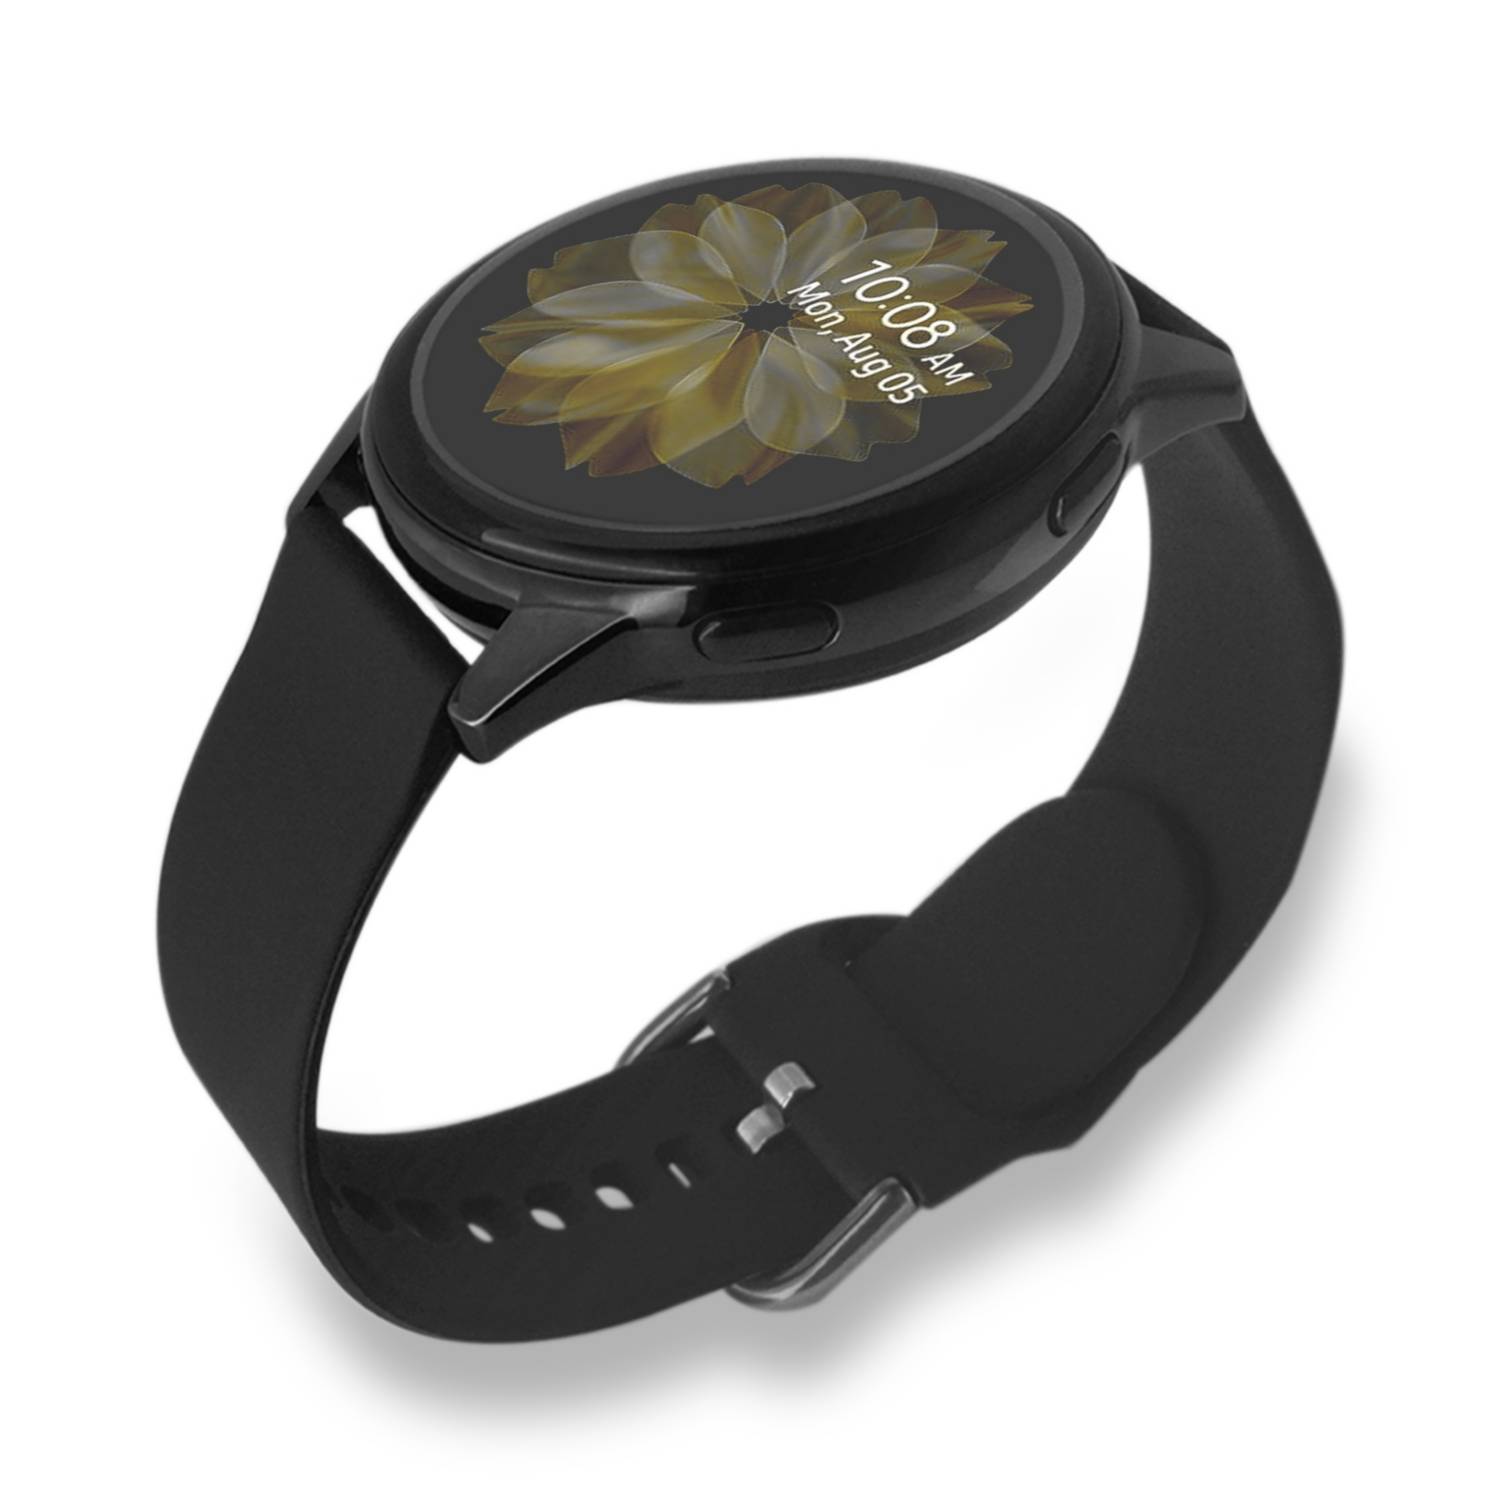 smartwatch redondo active 2 gama alta generico